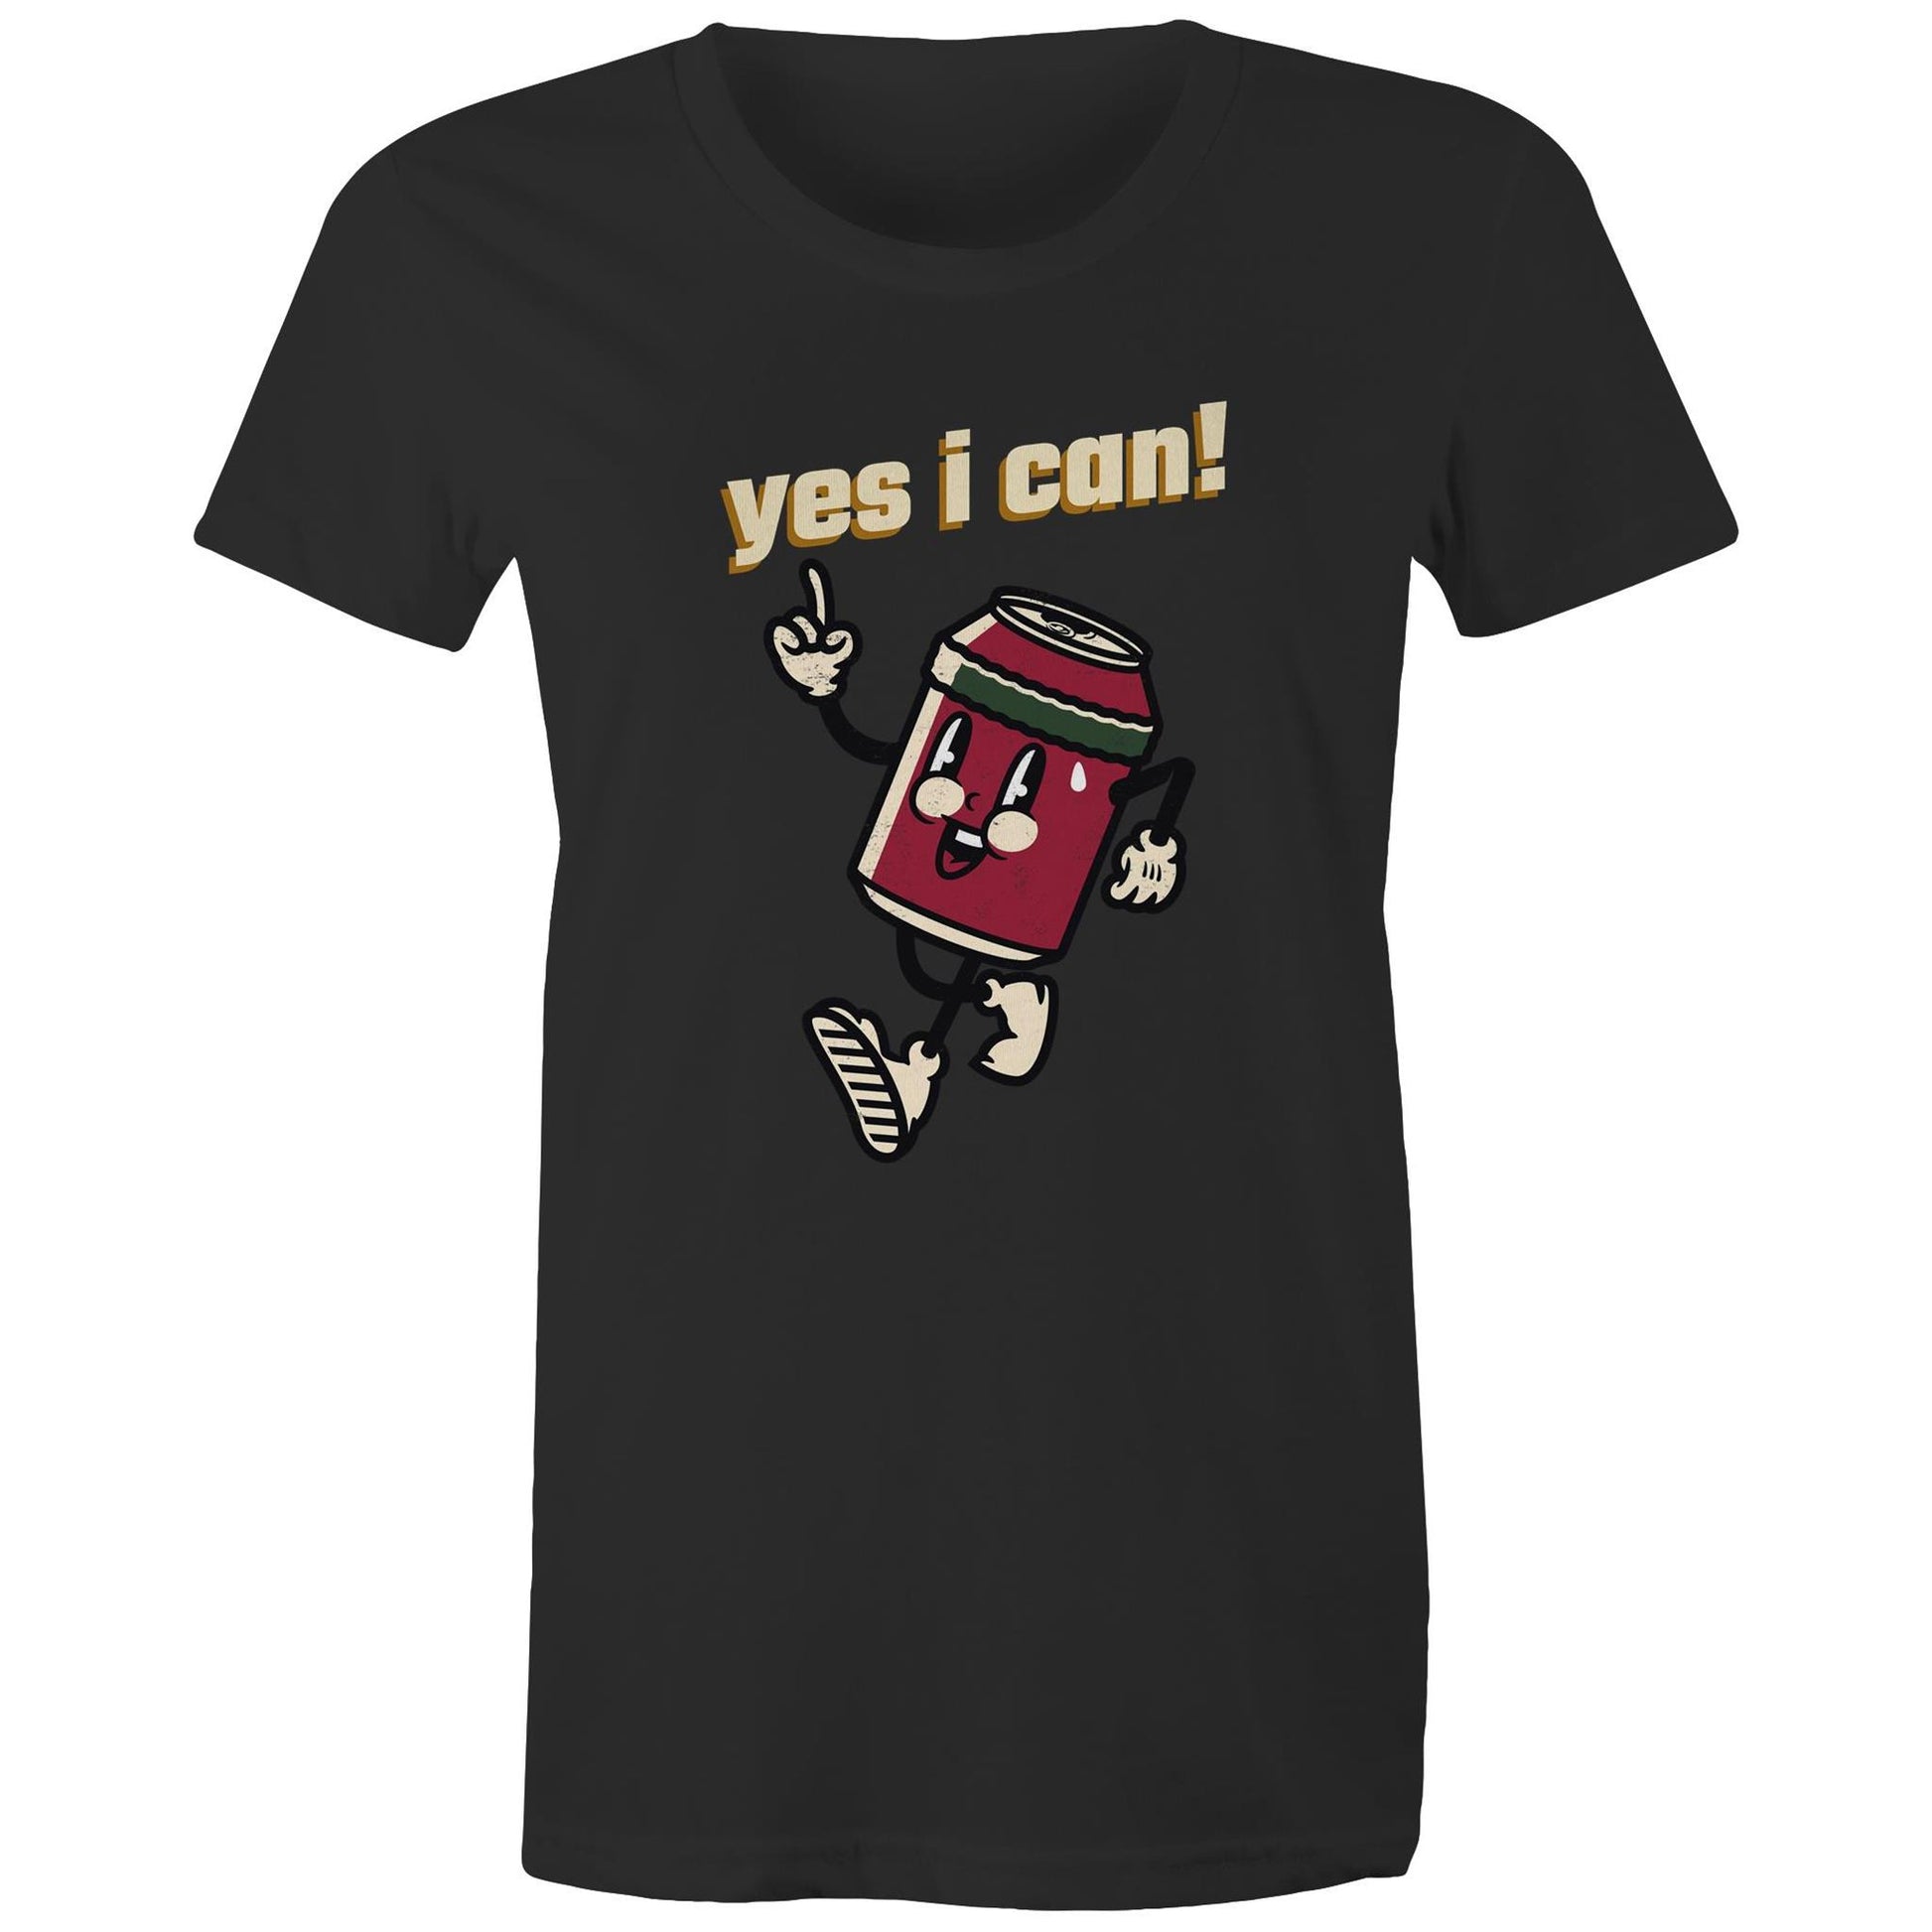 Yes I Can! - Womens T-shirt Black Womens T-shirt Motivation Retro